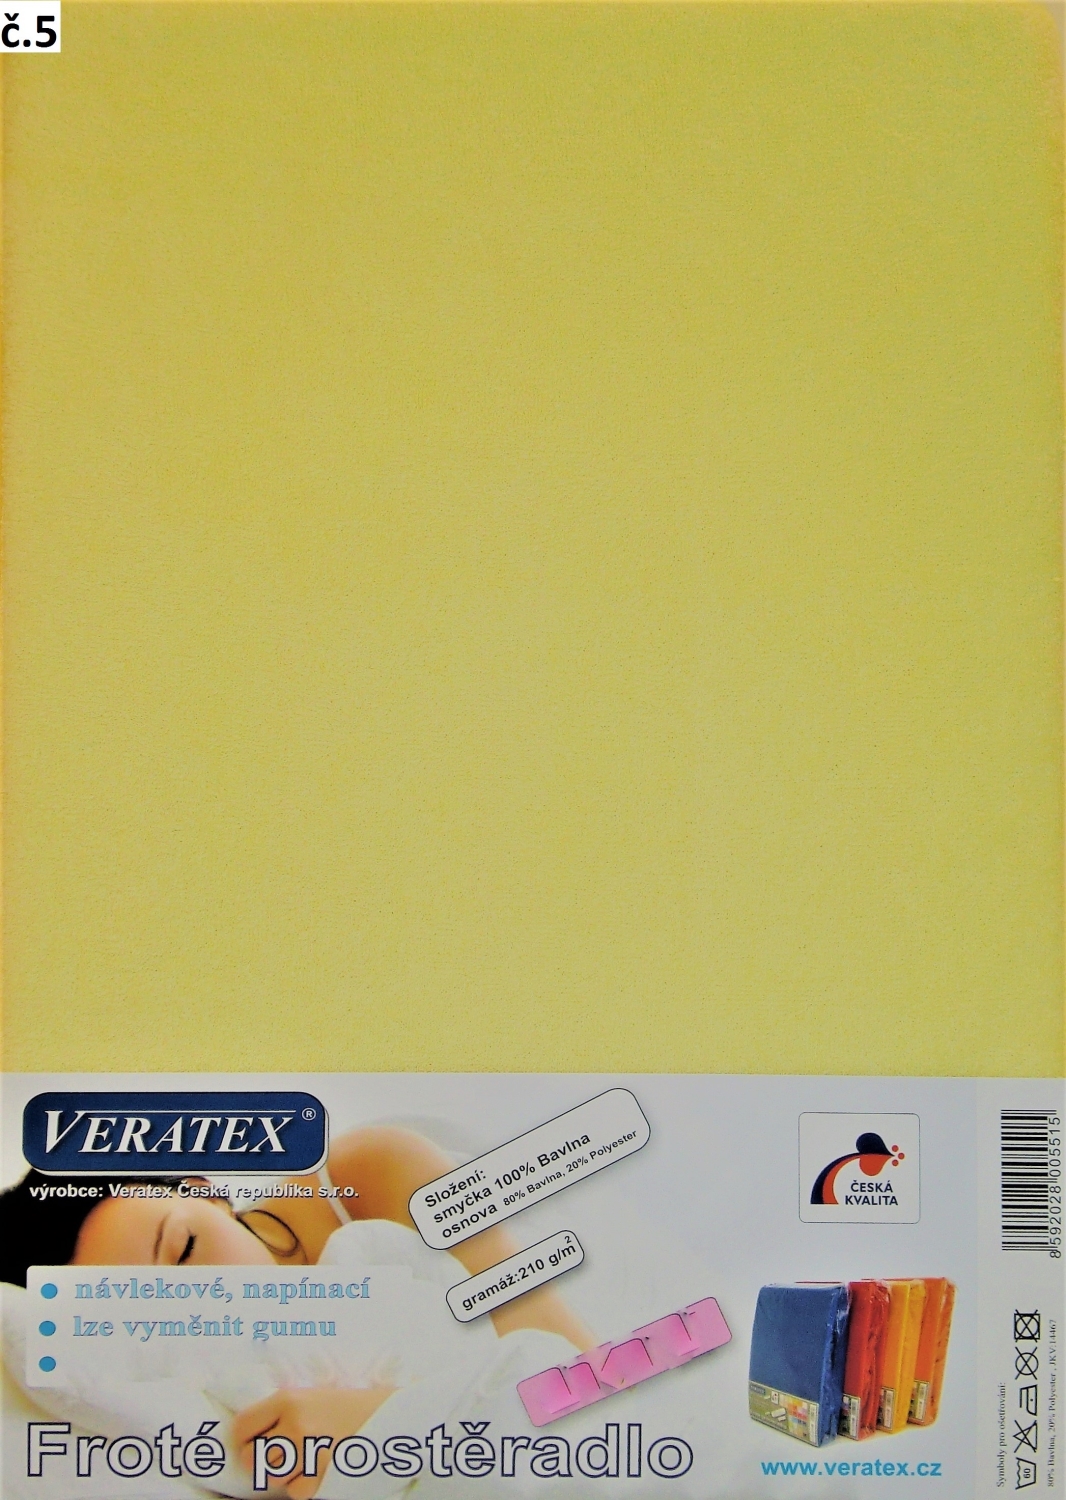 Veratex Froté prostěradlo 90x210/16 cm (č. 5-sv.žlutá) 90 x 210 cm